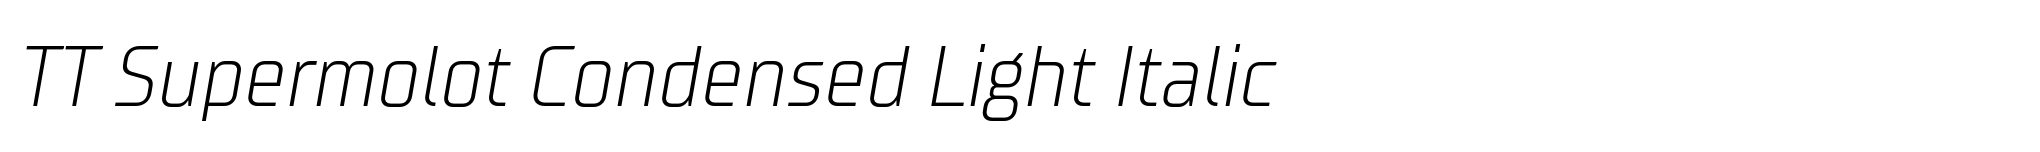 TT Supermolot Condensed Light Italic image